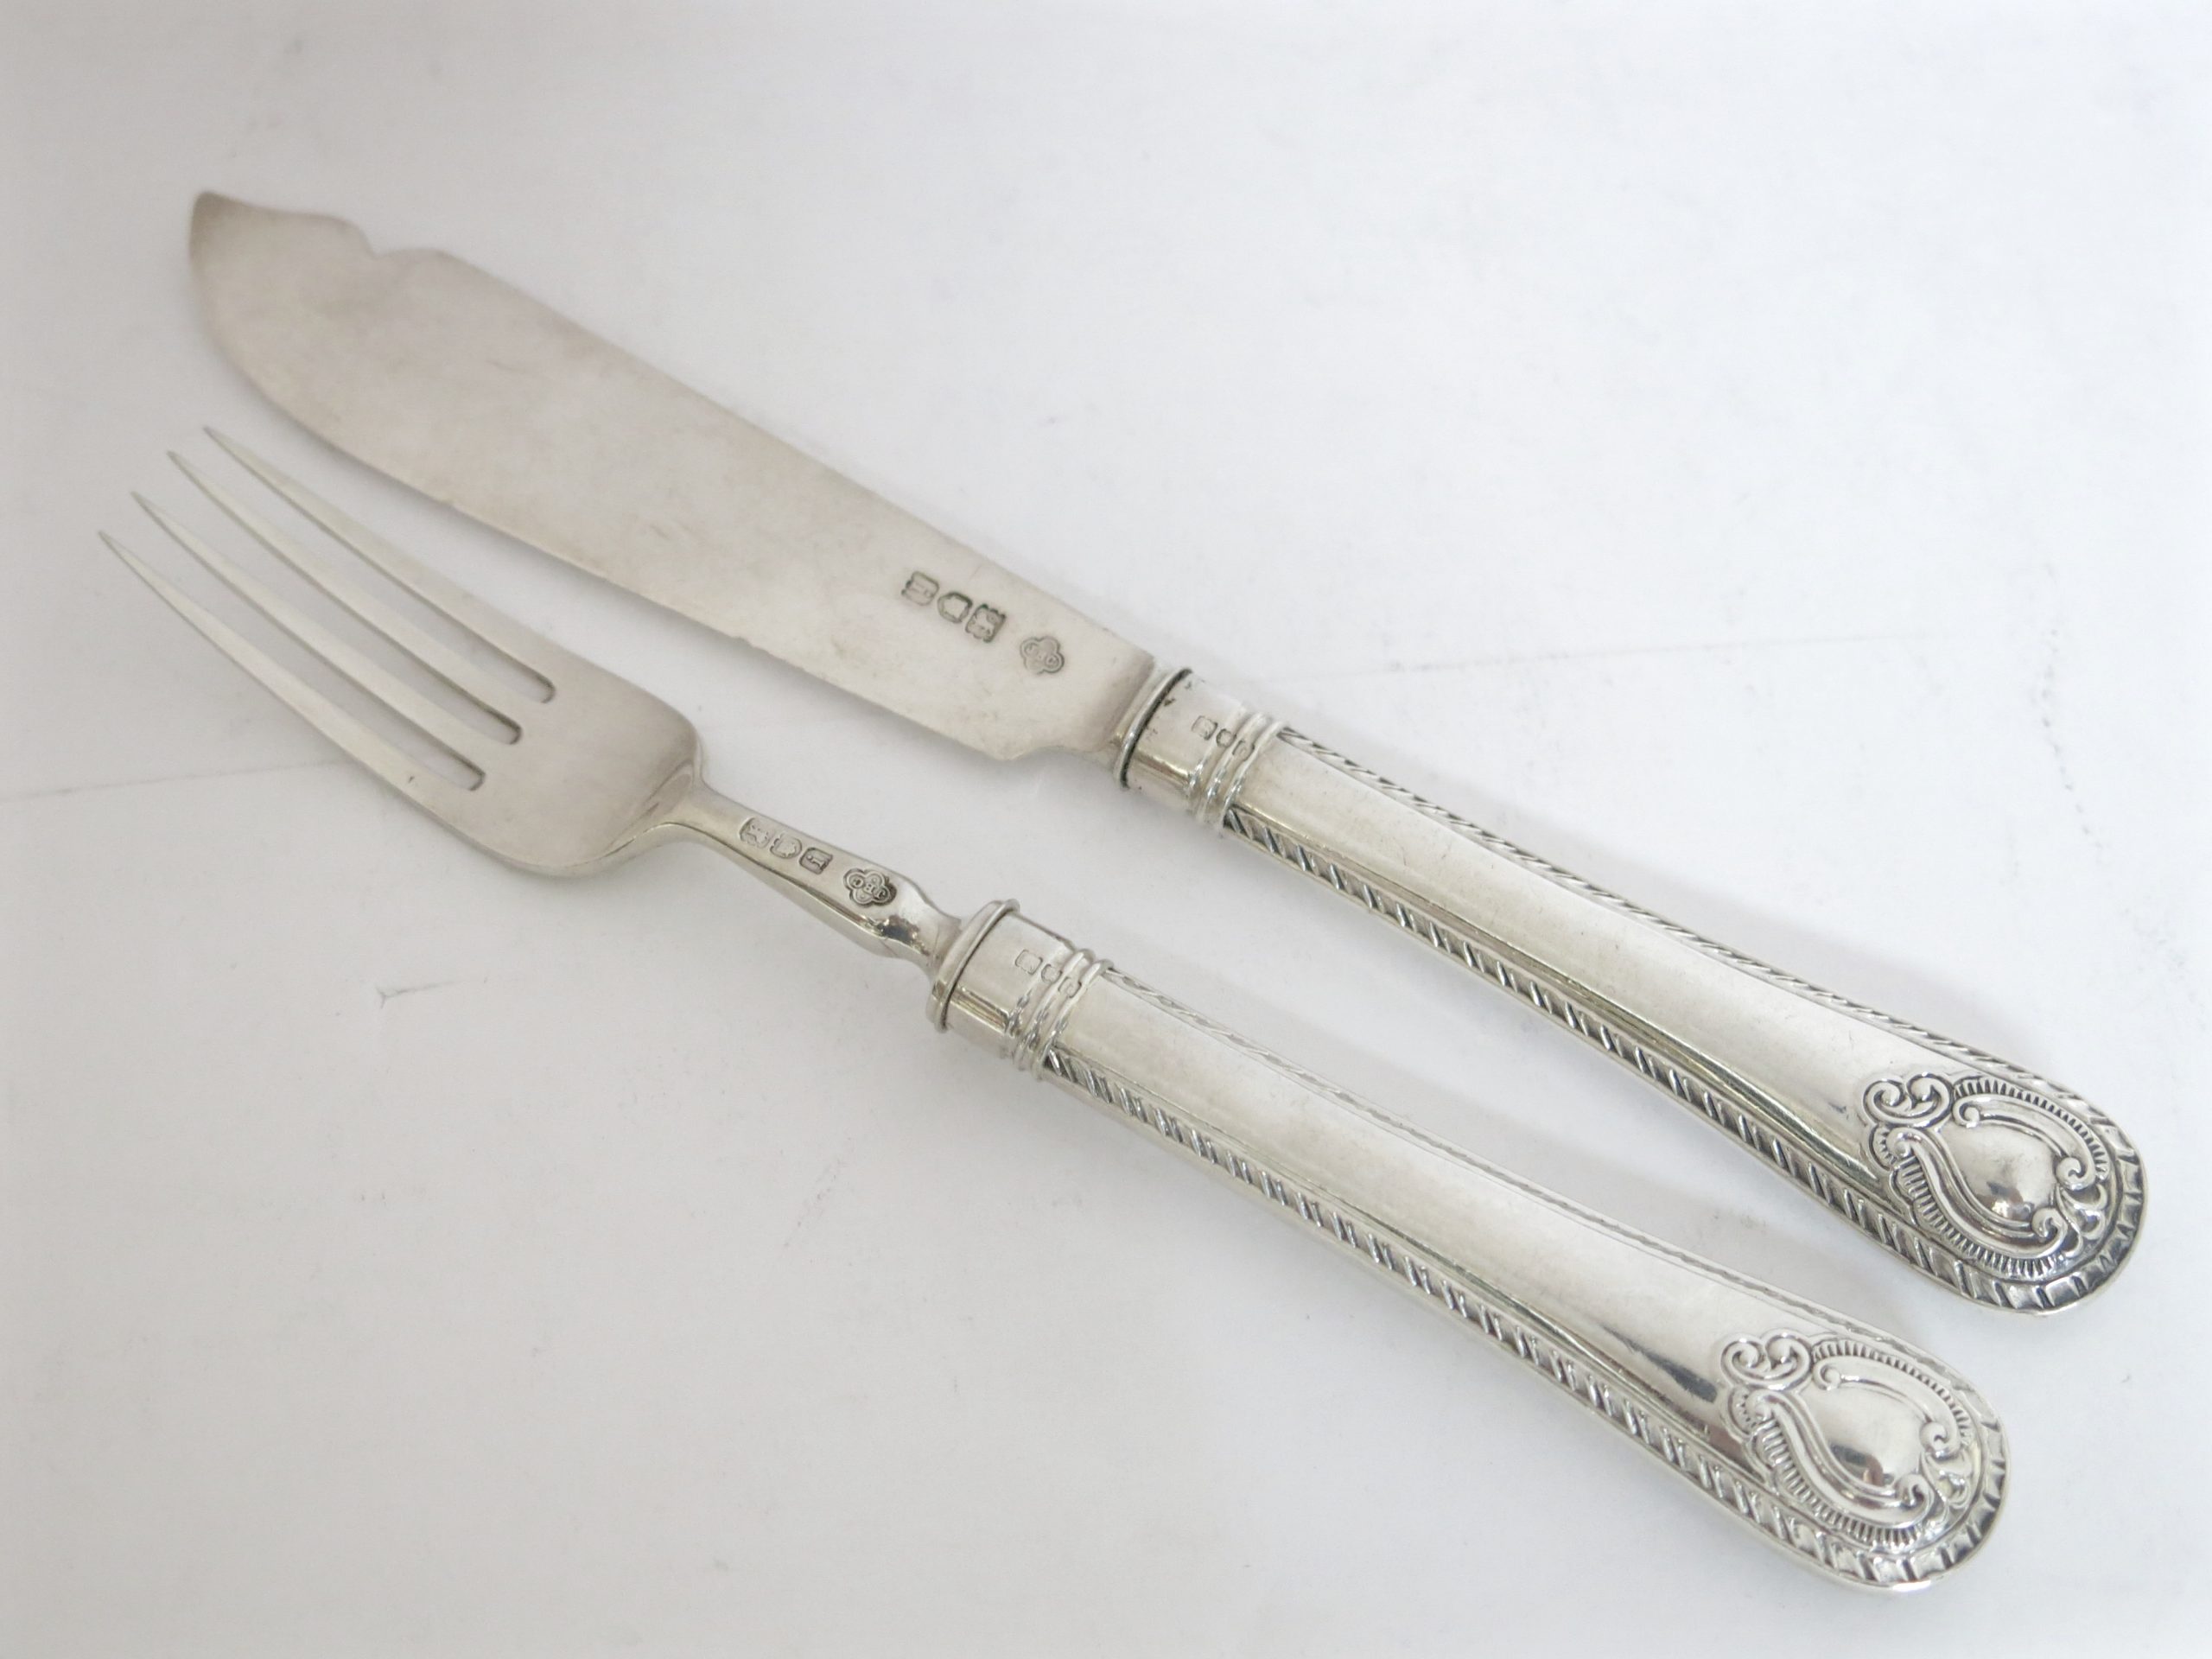 Antique English 12pr Fish Knives & Forks. Sterling Silver Handles & Blades. 1904